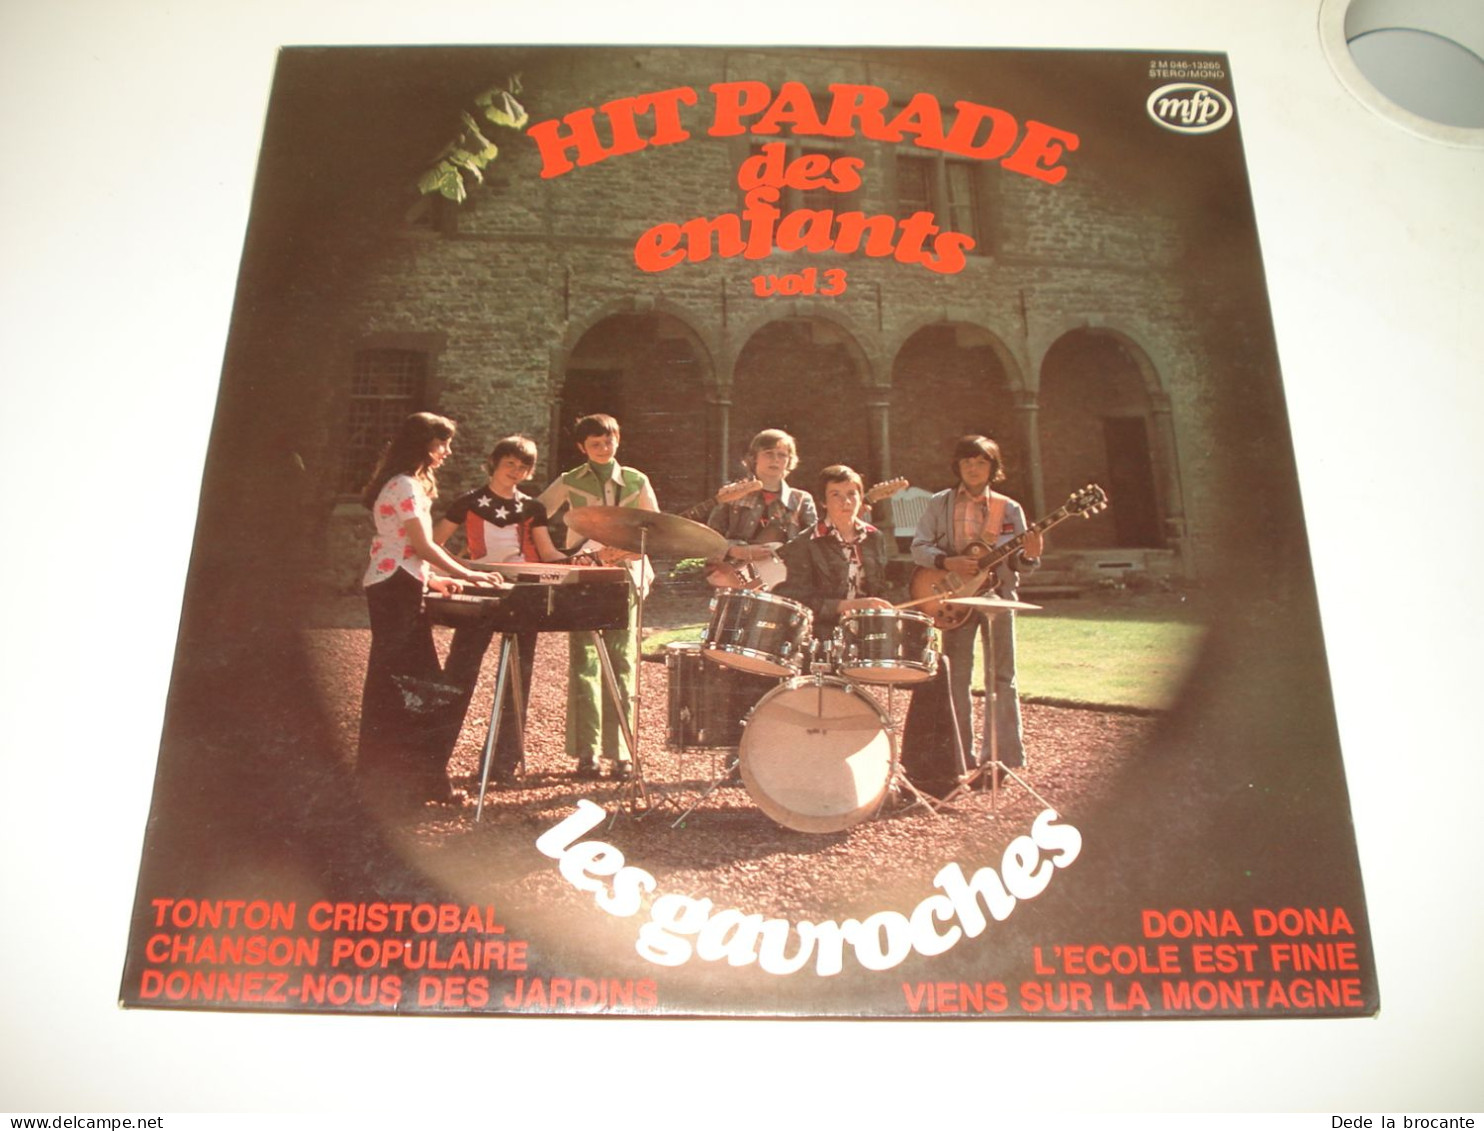 B14 / Les Gavroches – Hit-Parade Enfant 3 – LP -  2 M 046-13265 - BE  1975  M/EX - Kinderlieder